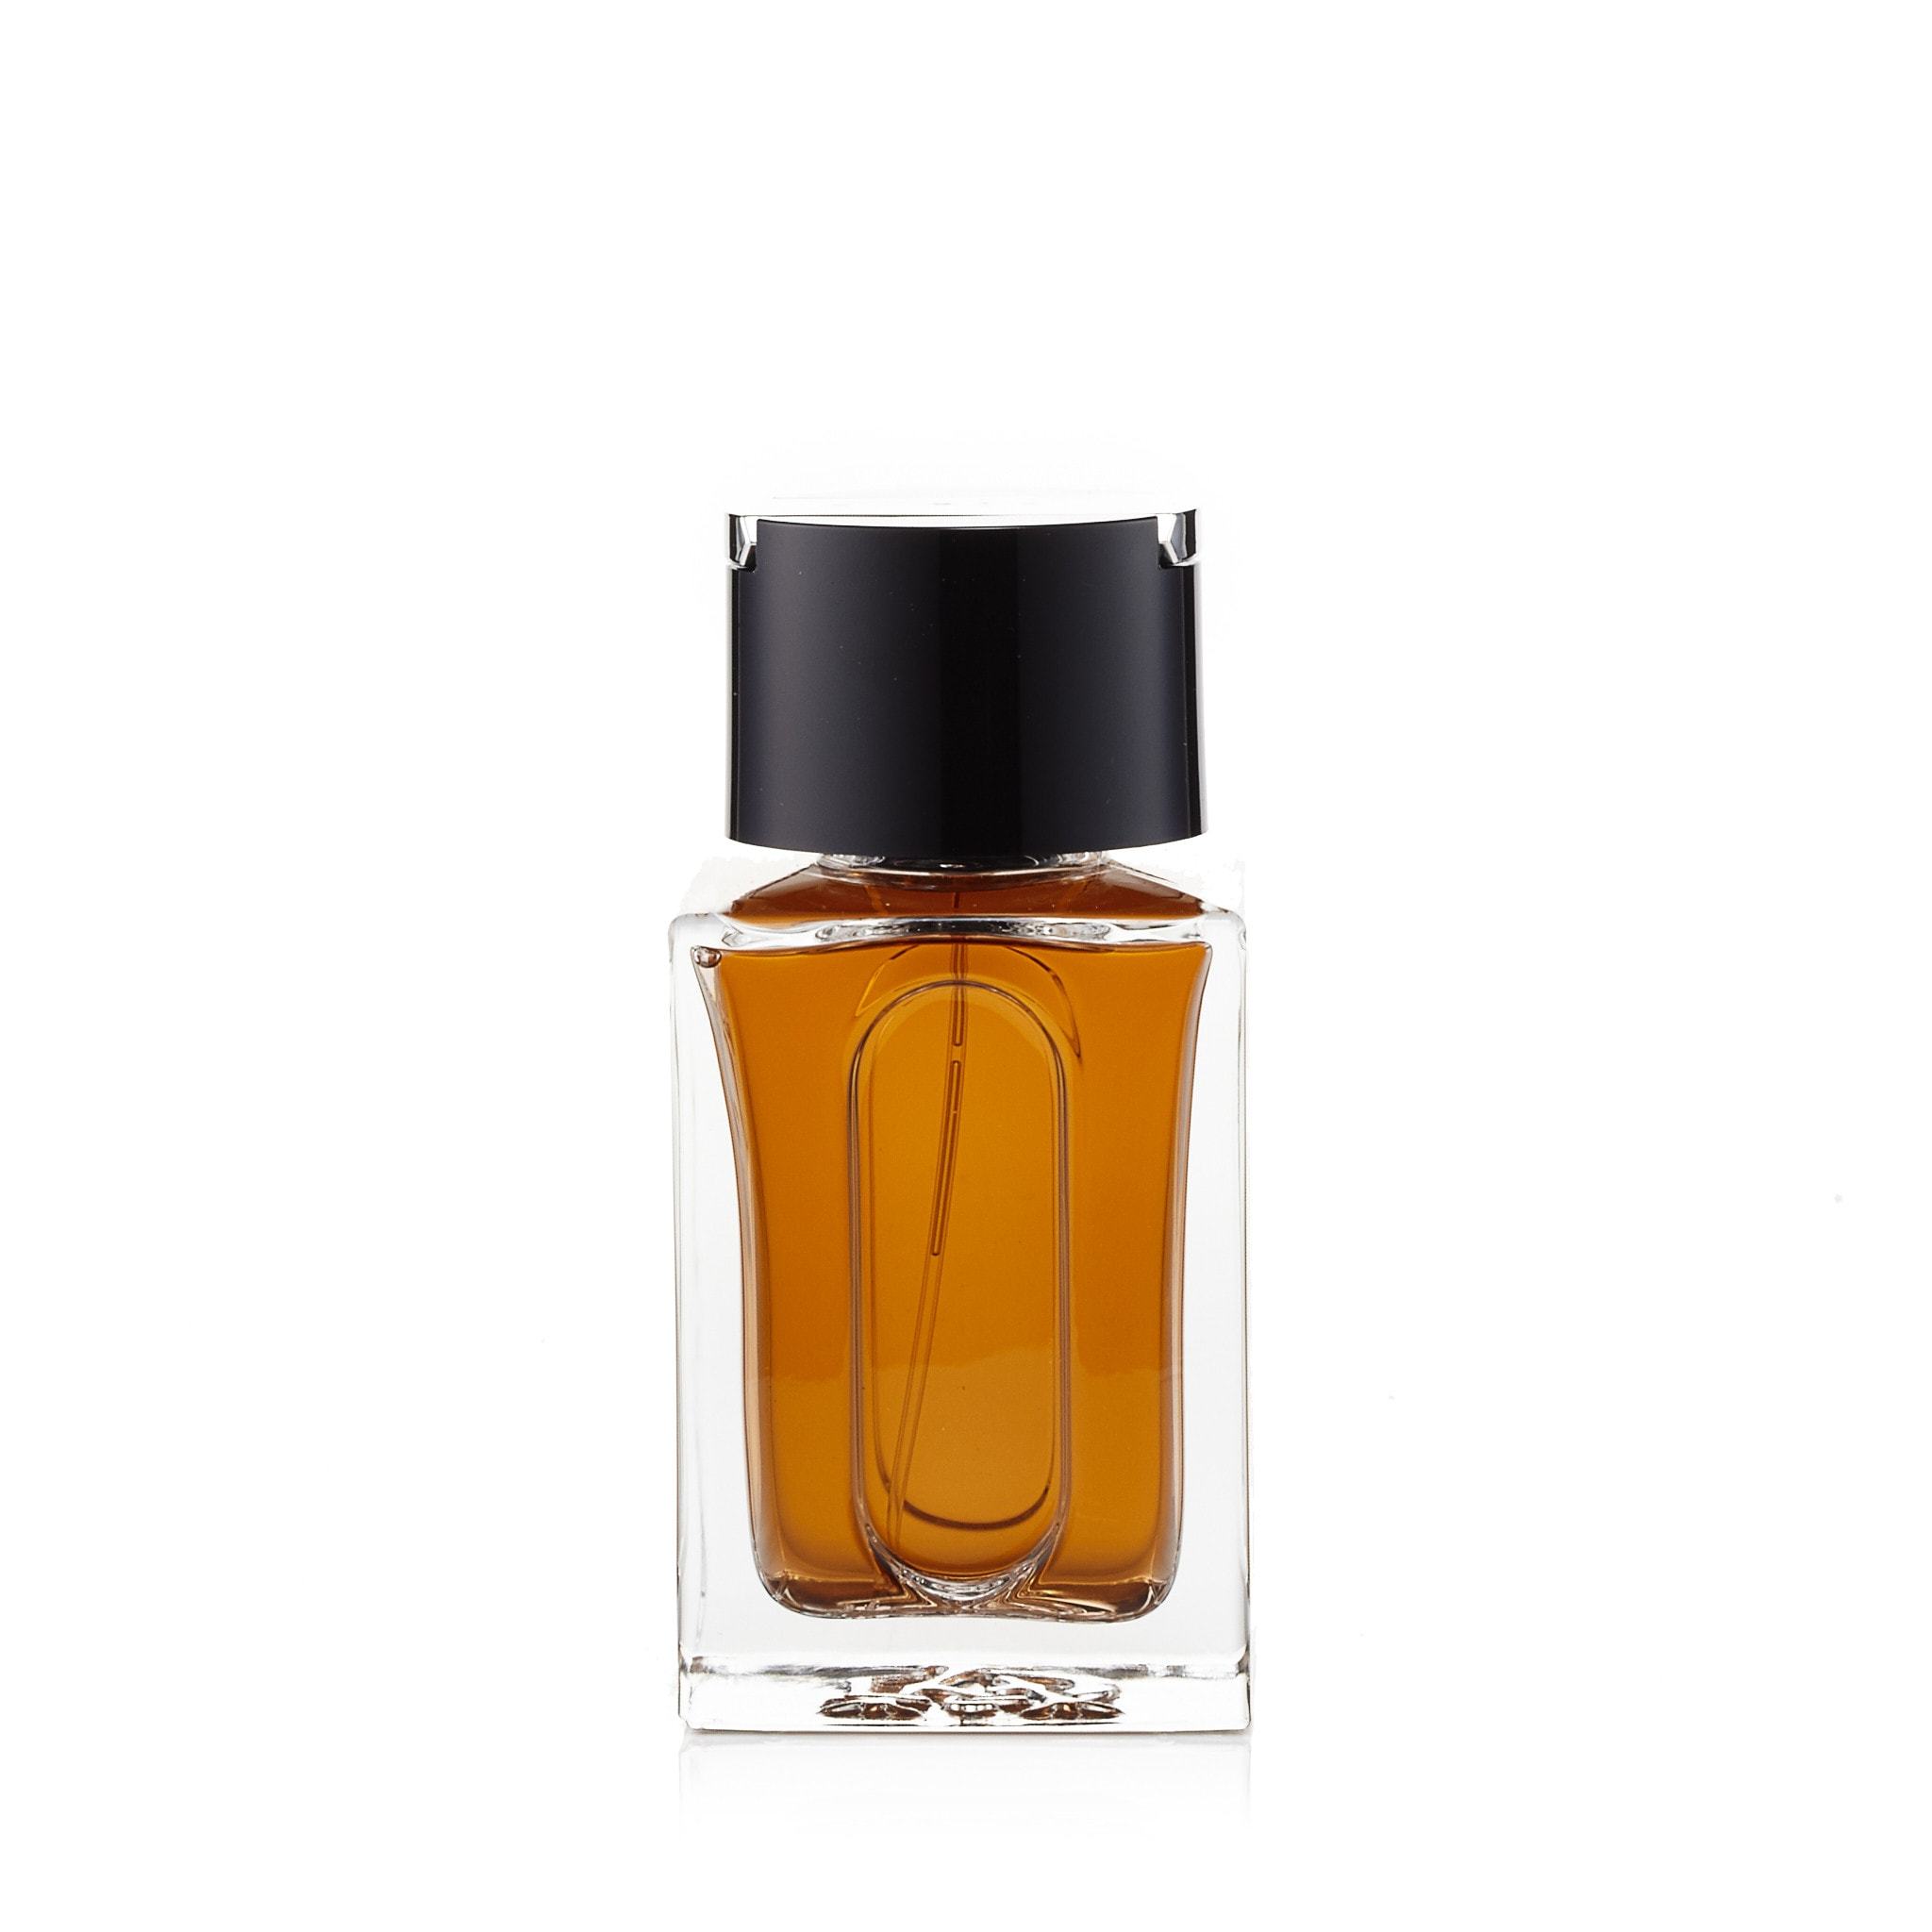 Underrated mens fragrances 👌🏼 #menscologne #perfume #fragrances #ch, Fragrance